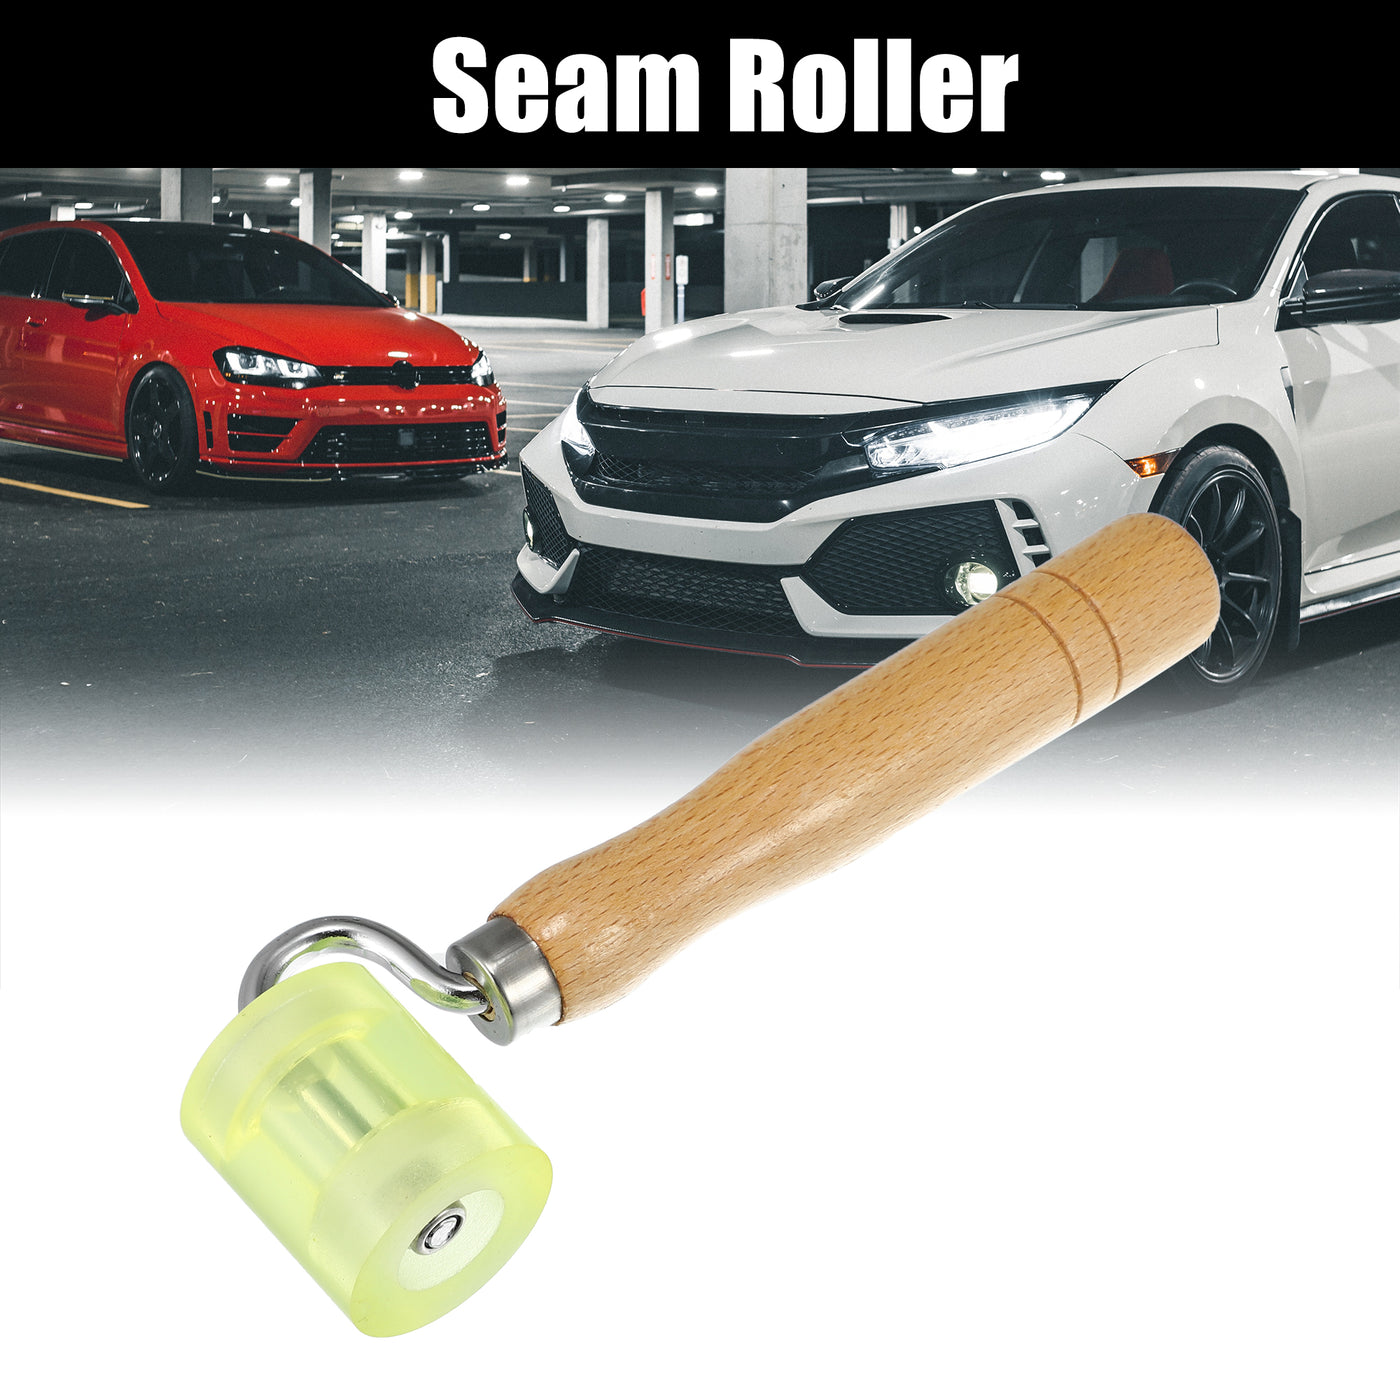 X AUTOHAUX 1pcs Seam Roller Wallpaper Car Audio Sound Deadening Application Roller Tool for Auto Noise Wheel Hand Pressure Roller PU Wooden Handle